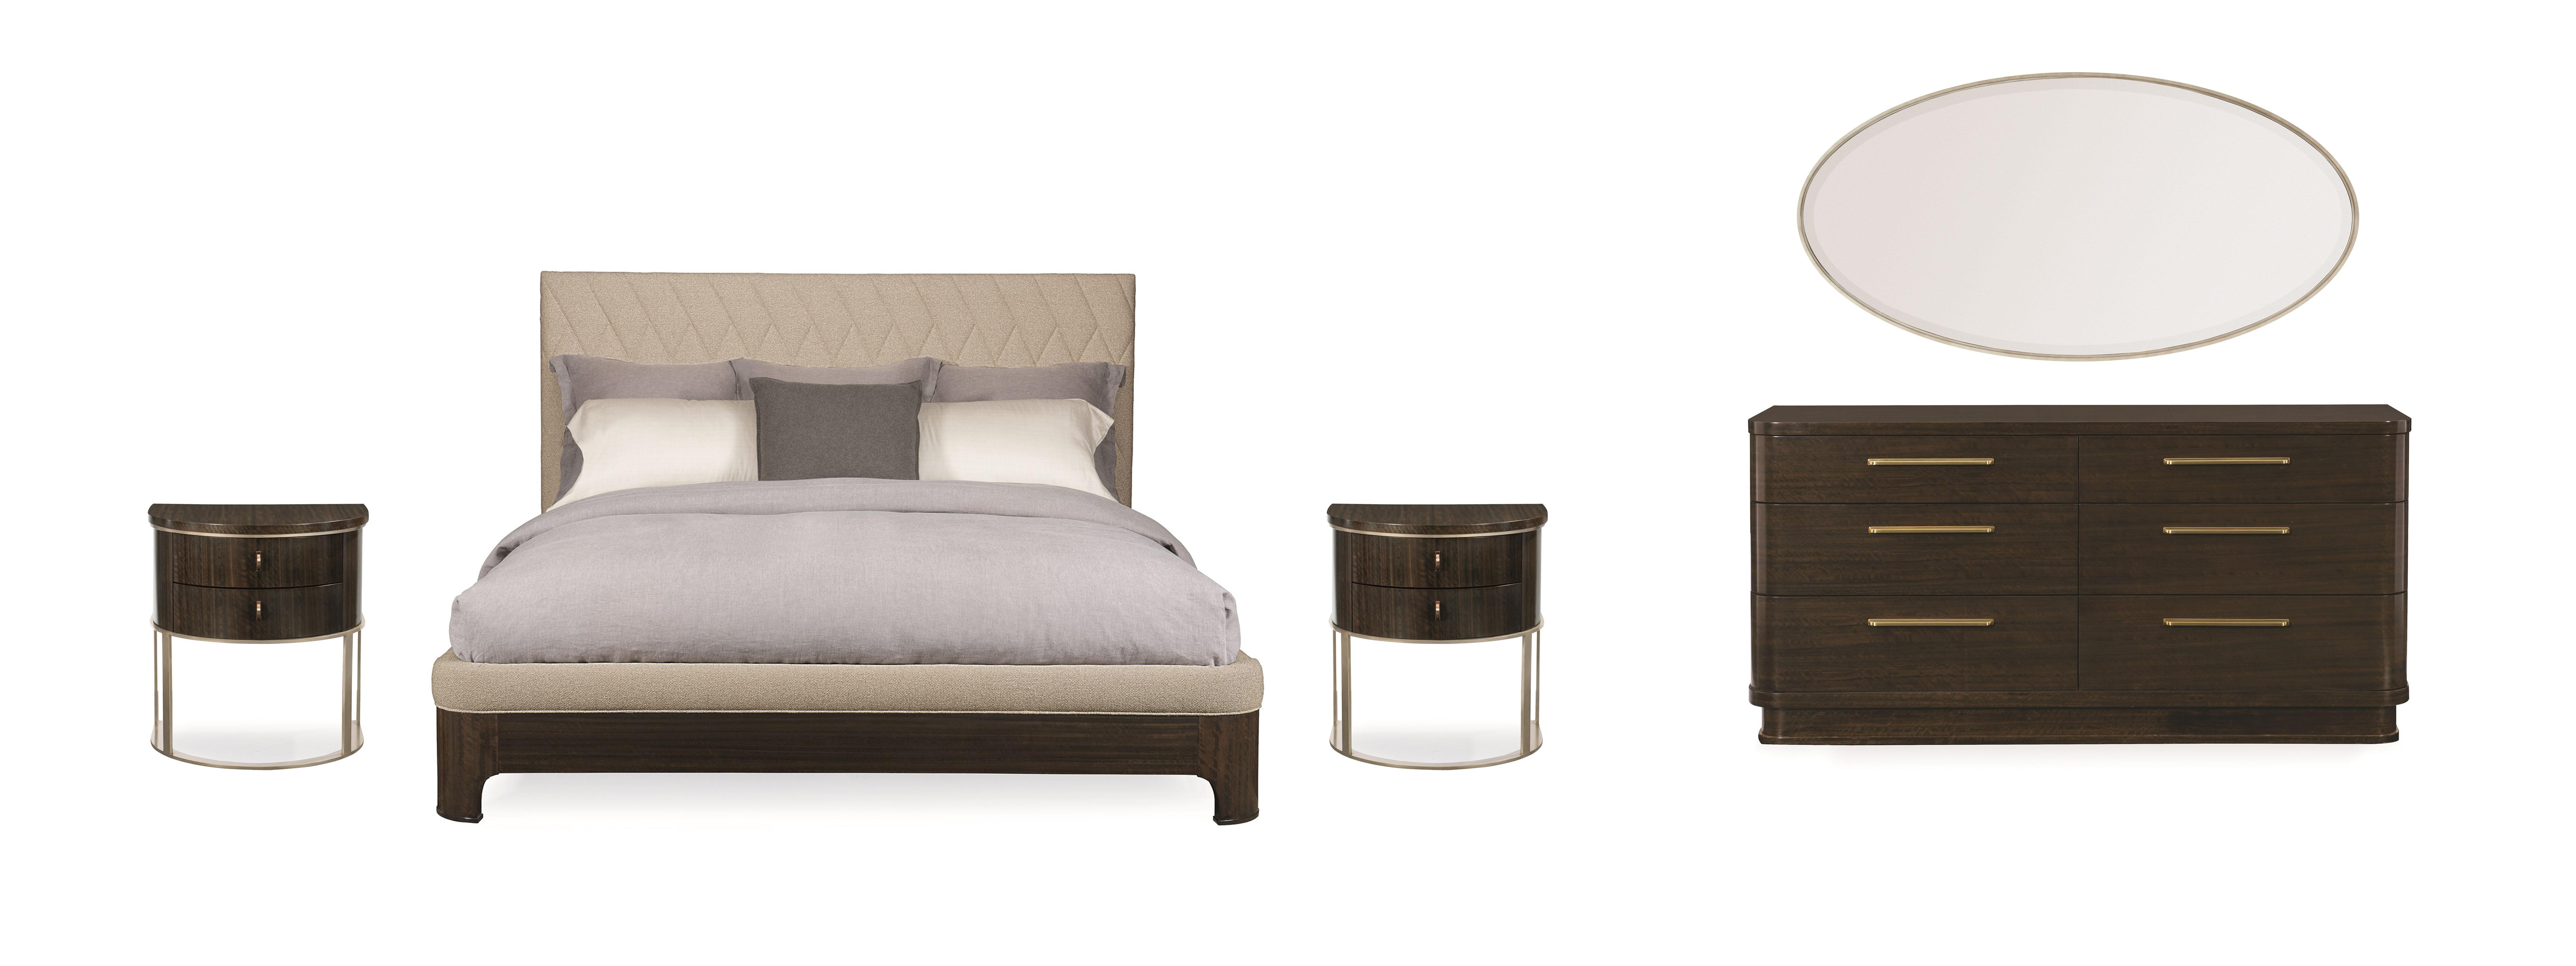 Contemporary Platform Bedroom Set MODERNE BED / MODERNE NIGHTSTAND M023-417-121-Set-5 in Neutral Fabric